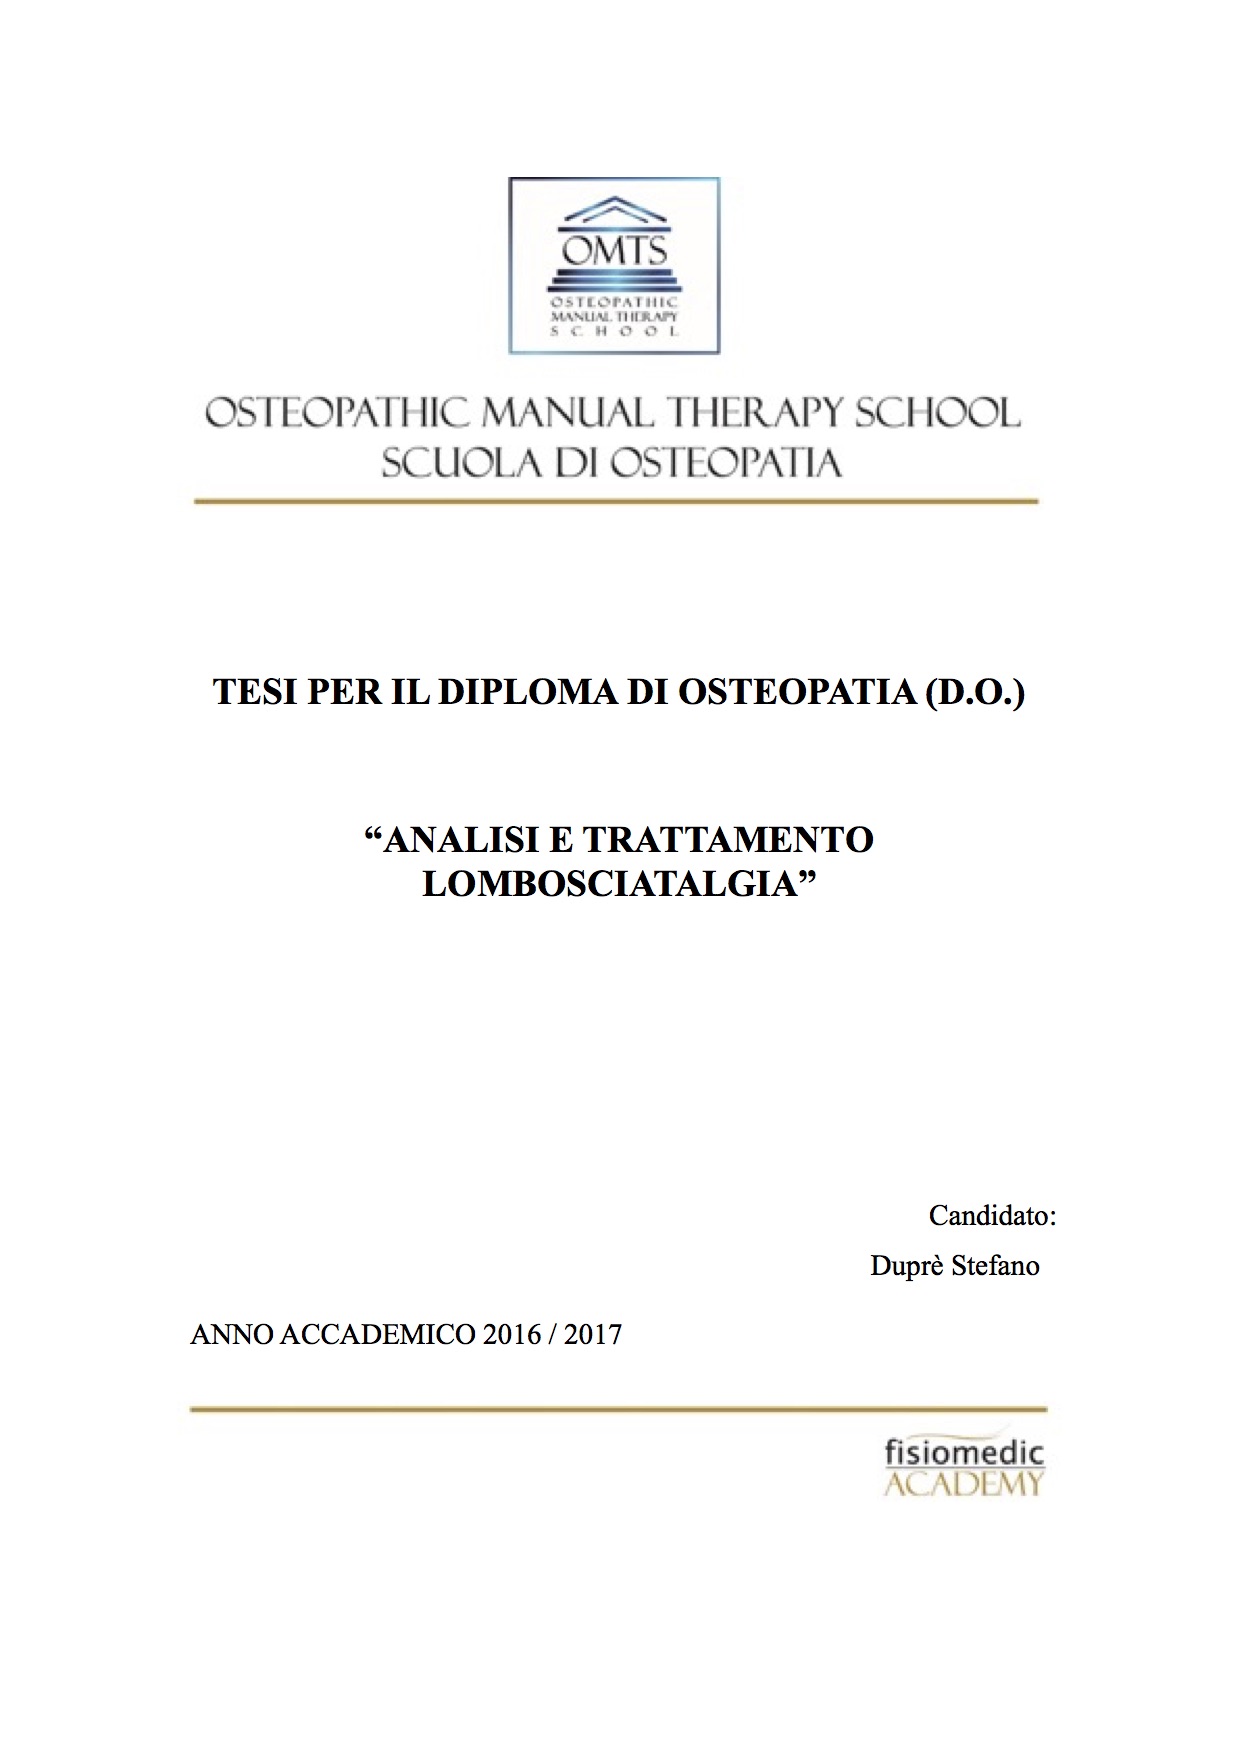 Stefano Dupre Tesi Diploma Osteopatia 2017